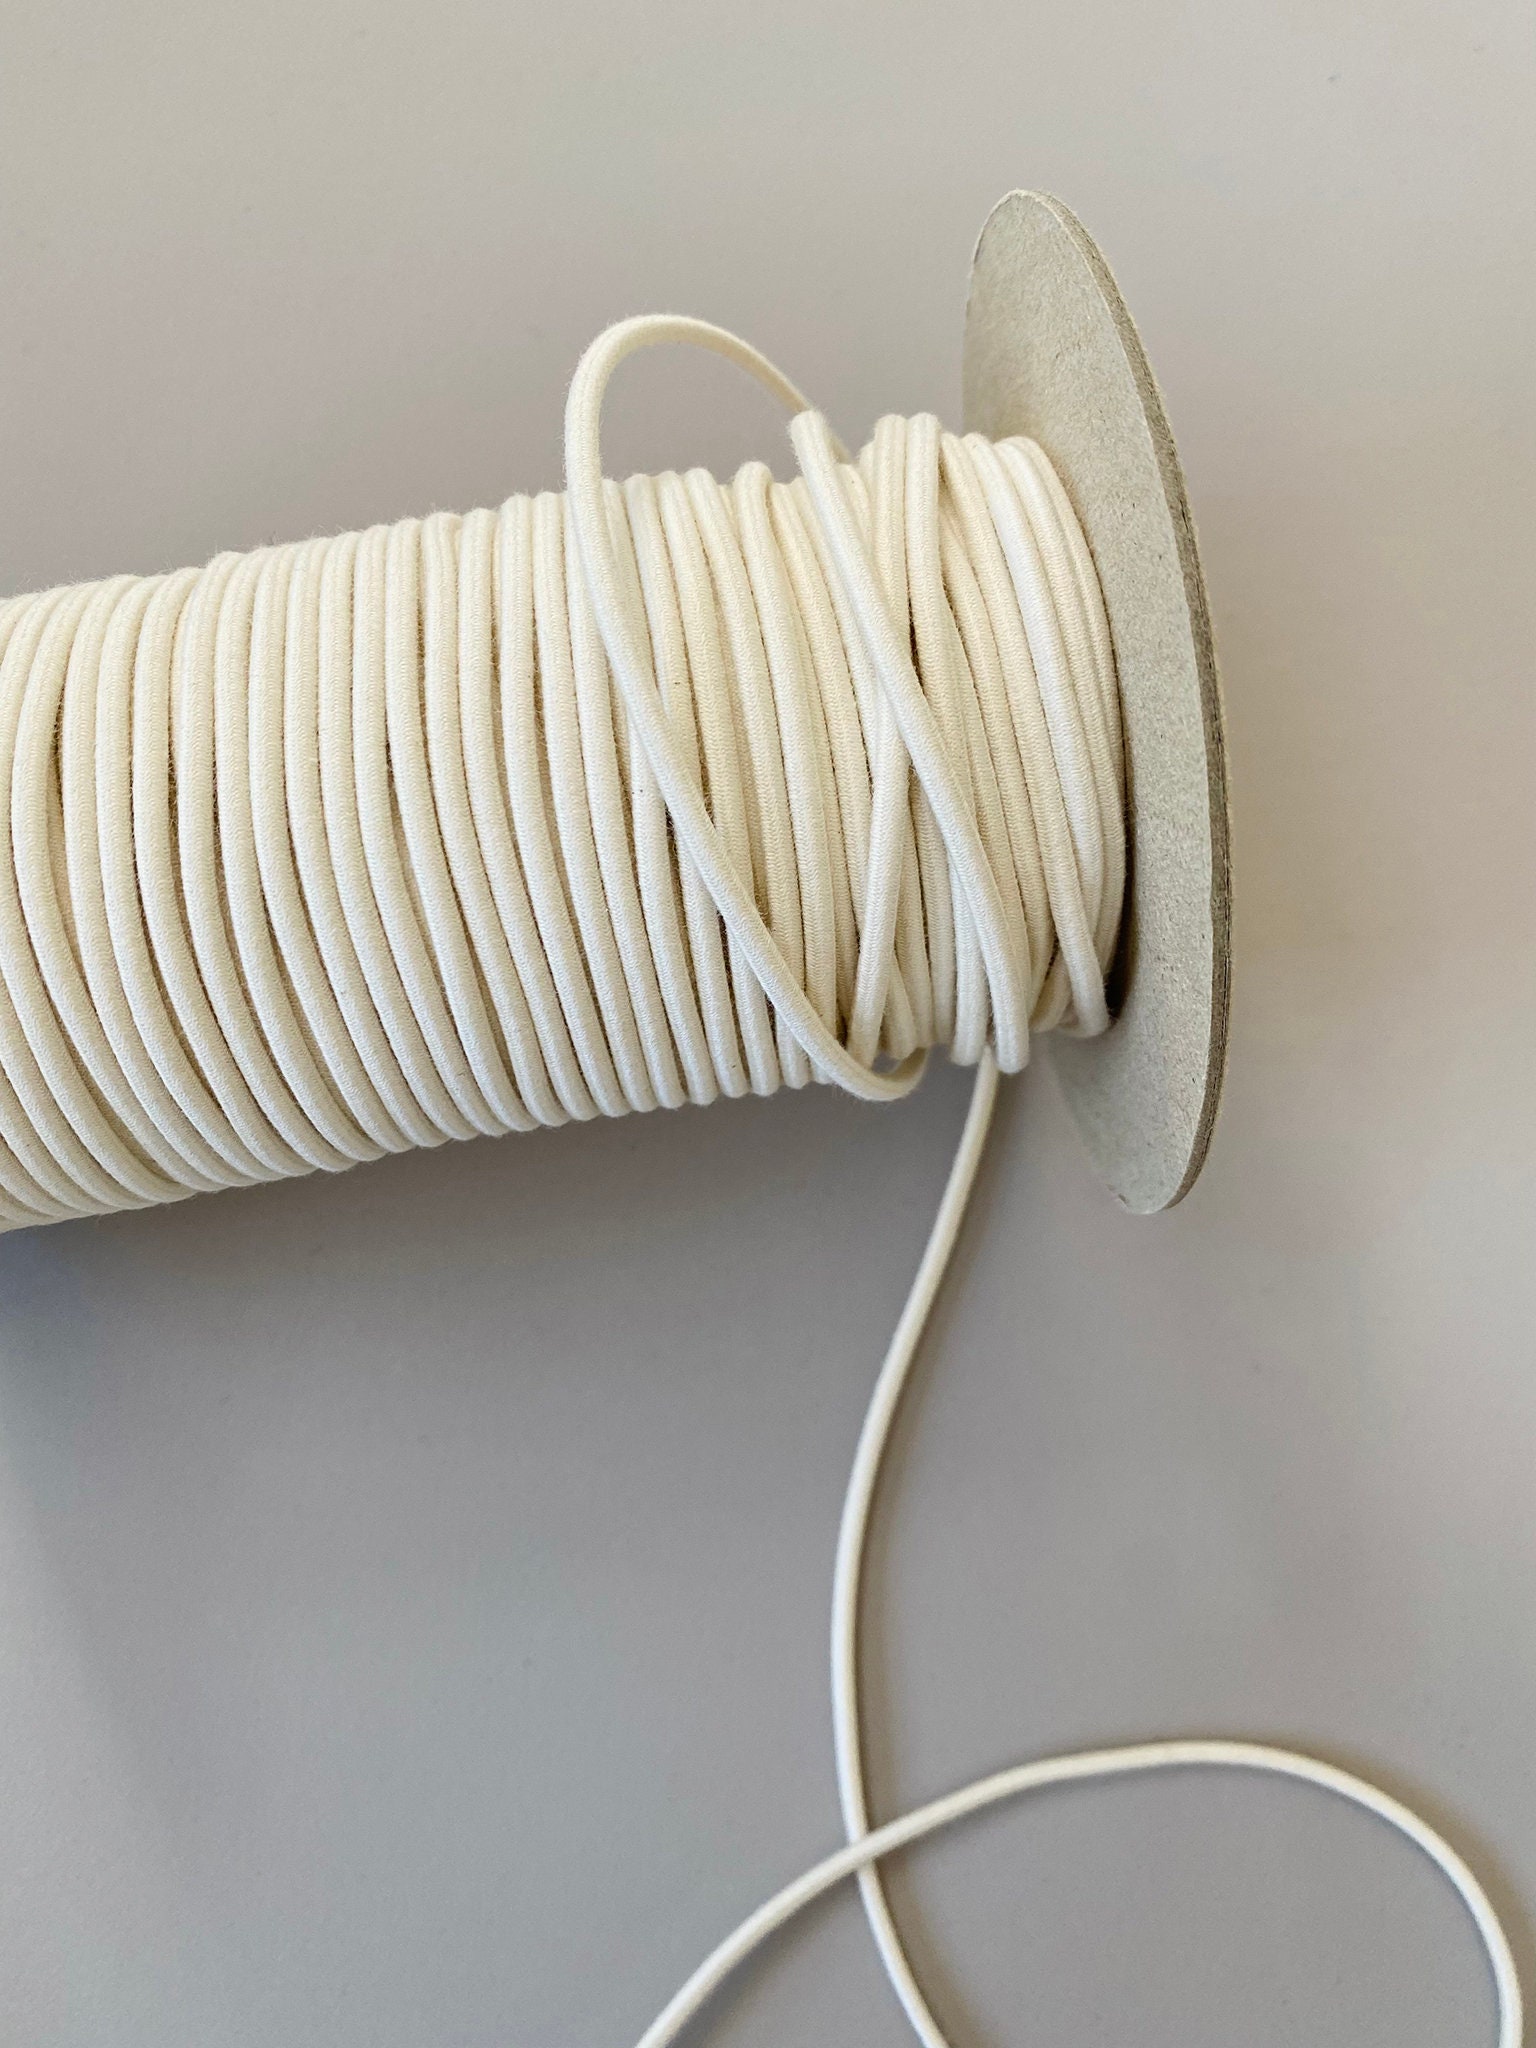 1MM Stretch-Tastic Cotton Elastic Cord, Black (100 Meters)